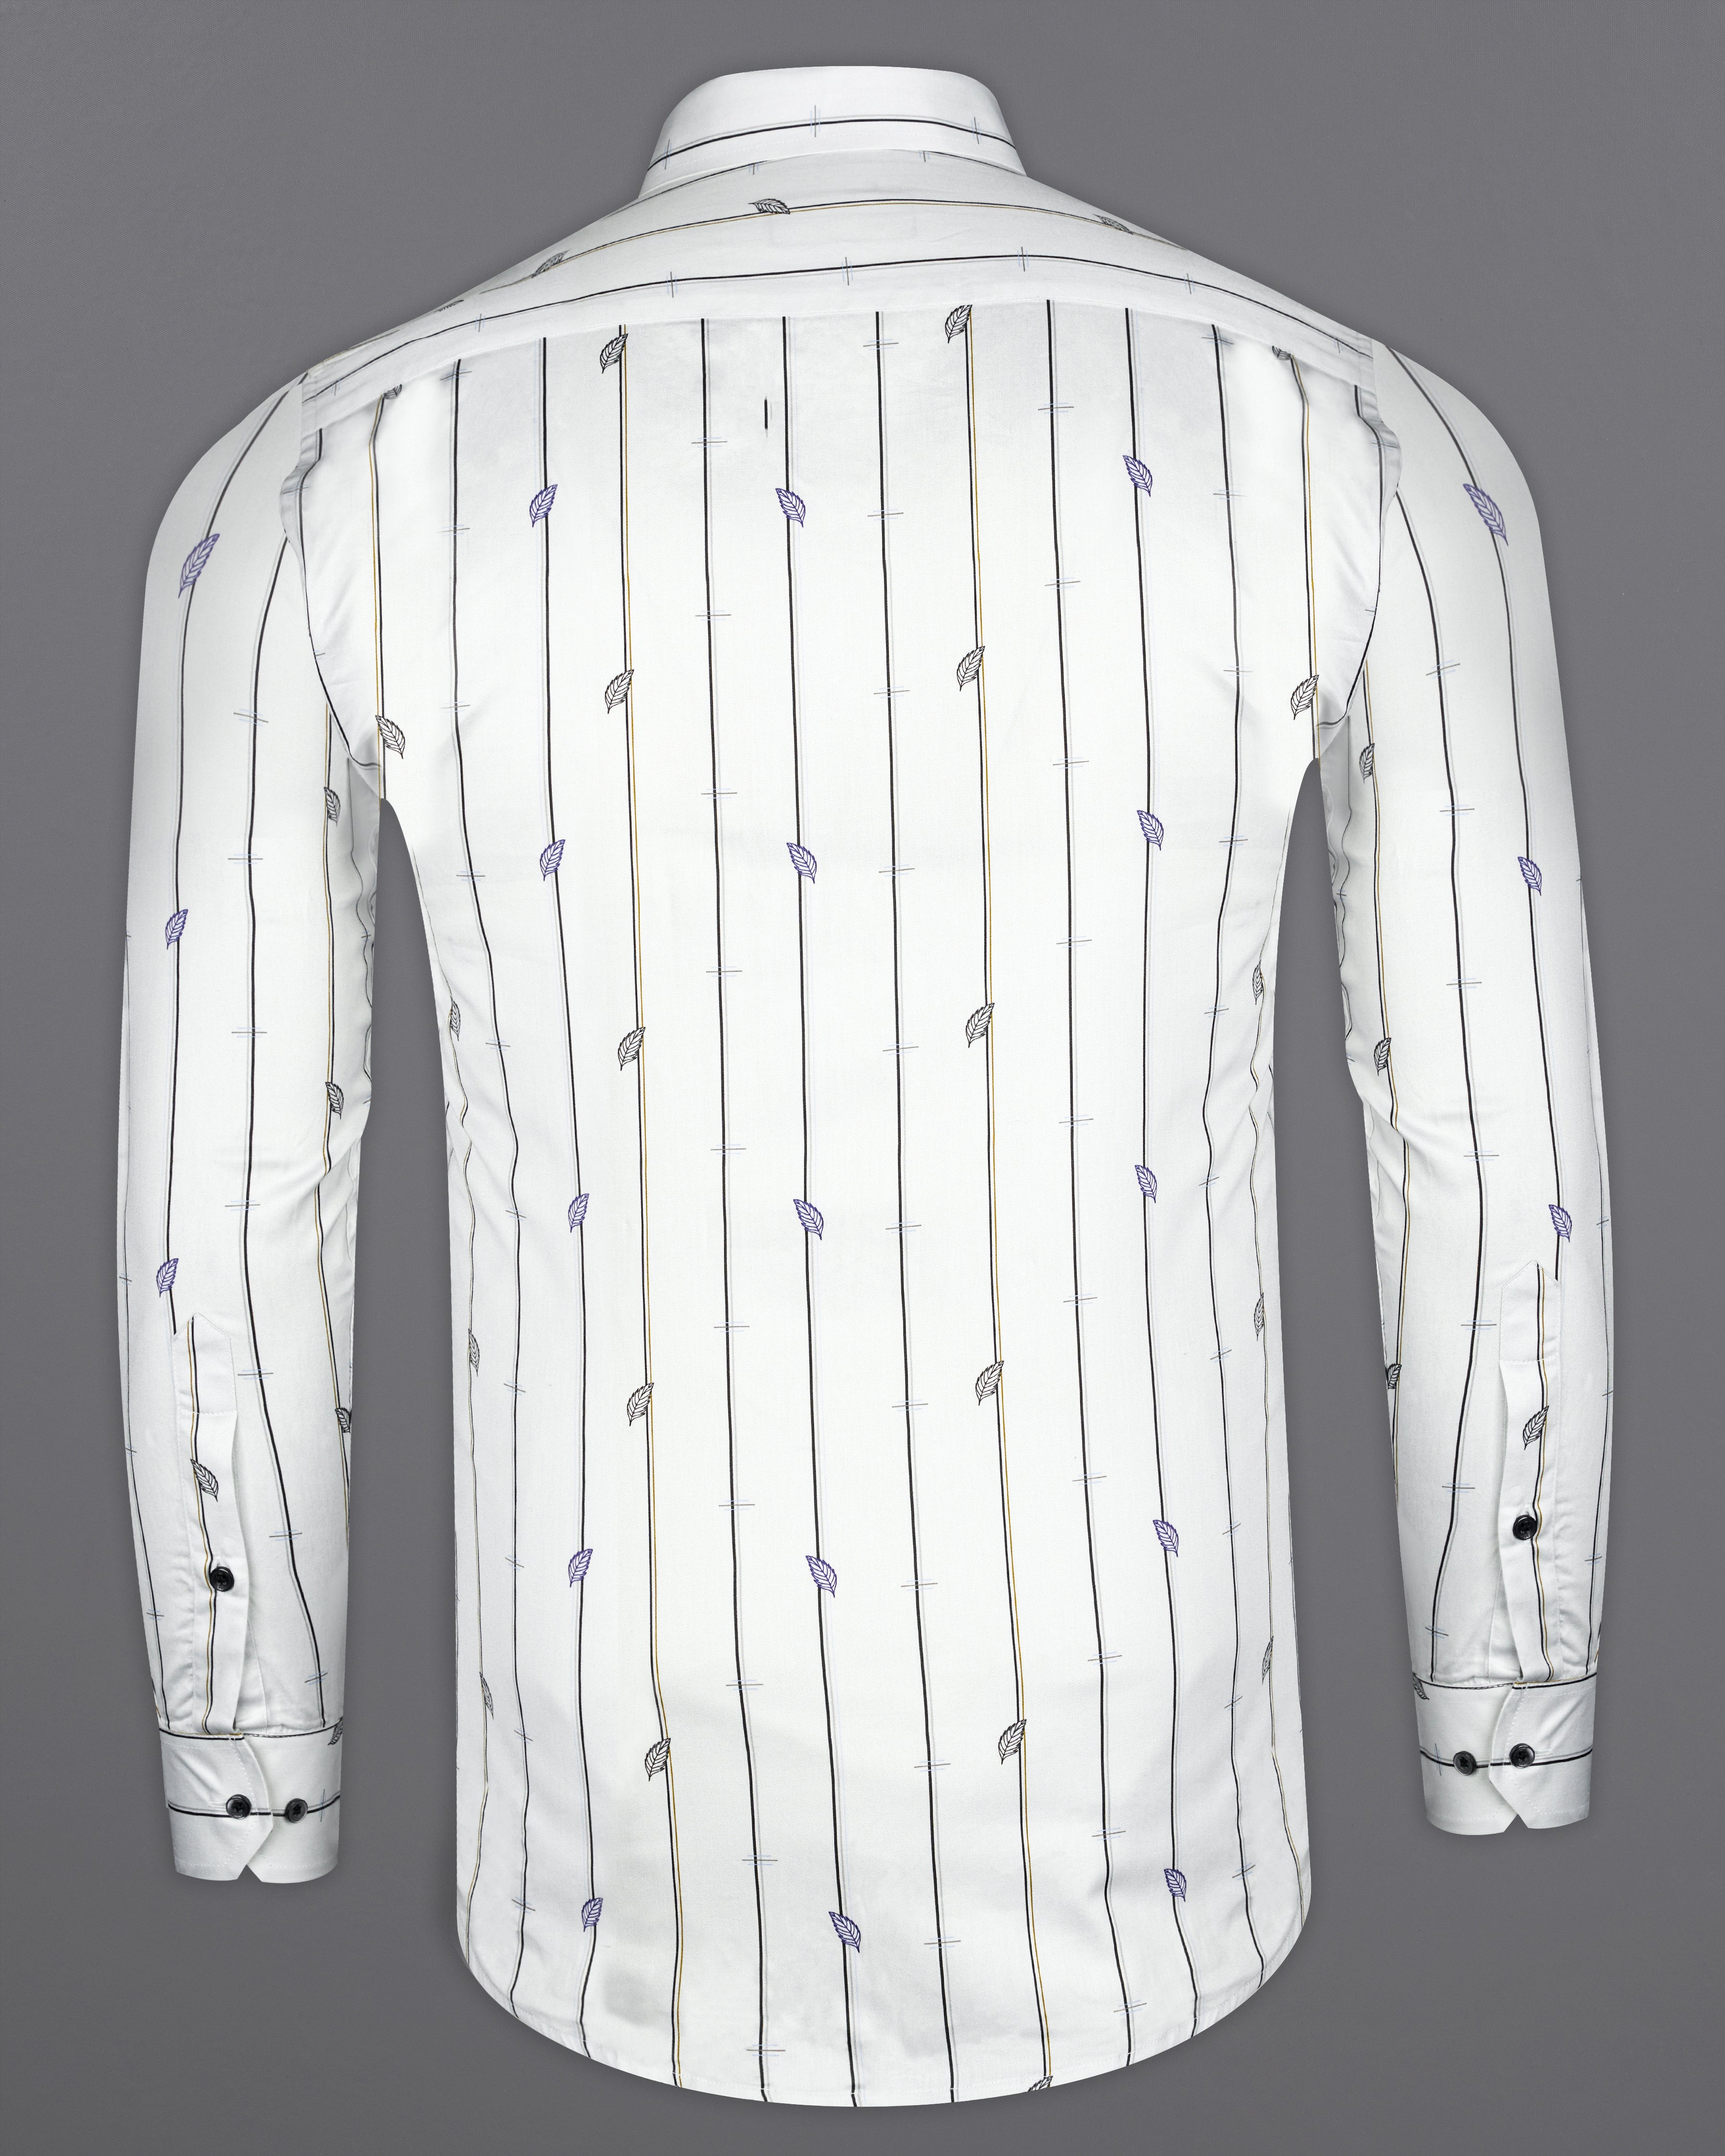 Bright White Striped with Leaves Printed Super Soft Premium Cotton Shirt 9887-BLK-38, 9887-BLK-H-38, 9887-BLK-39, 9887-BLK-H-39, 9887-BLK-40, 9887-BLK-H-40, 9887-BLK-42, 9887-BLK-H-42, 9887-BLK-44, 9887-BLK-H-44, 9887-BLK-46, 9887-BLK-H-46, 9887-BLK-48, 9887-BLK-H-48, 9887-BLK-50, 9887-BLK-H-50, 9887-BLK-52, 9887-BLK-H-52